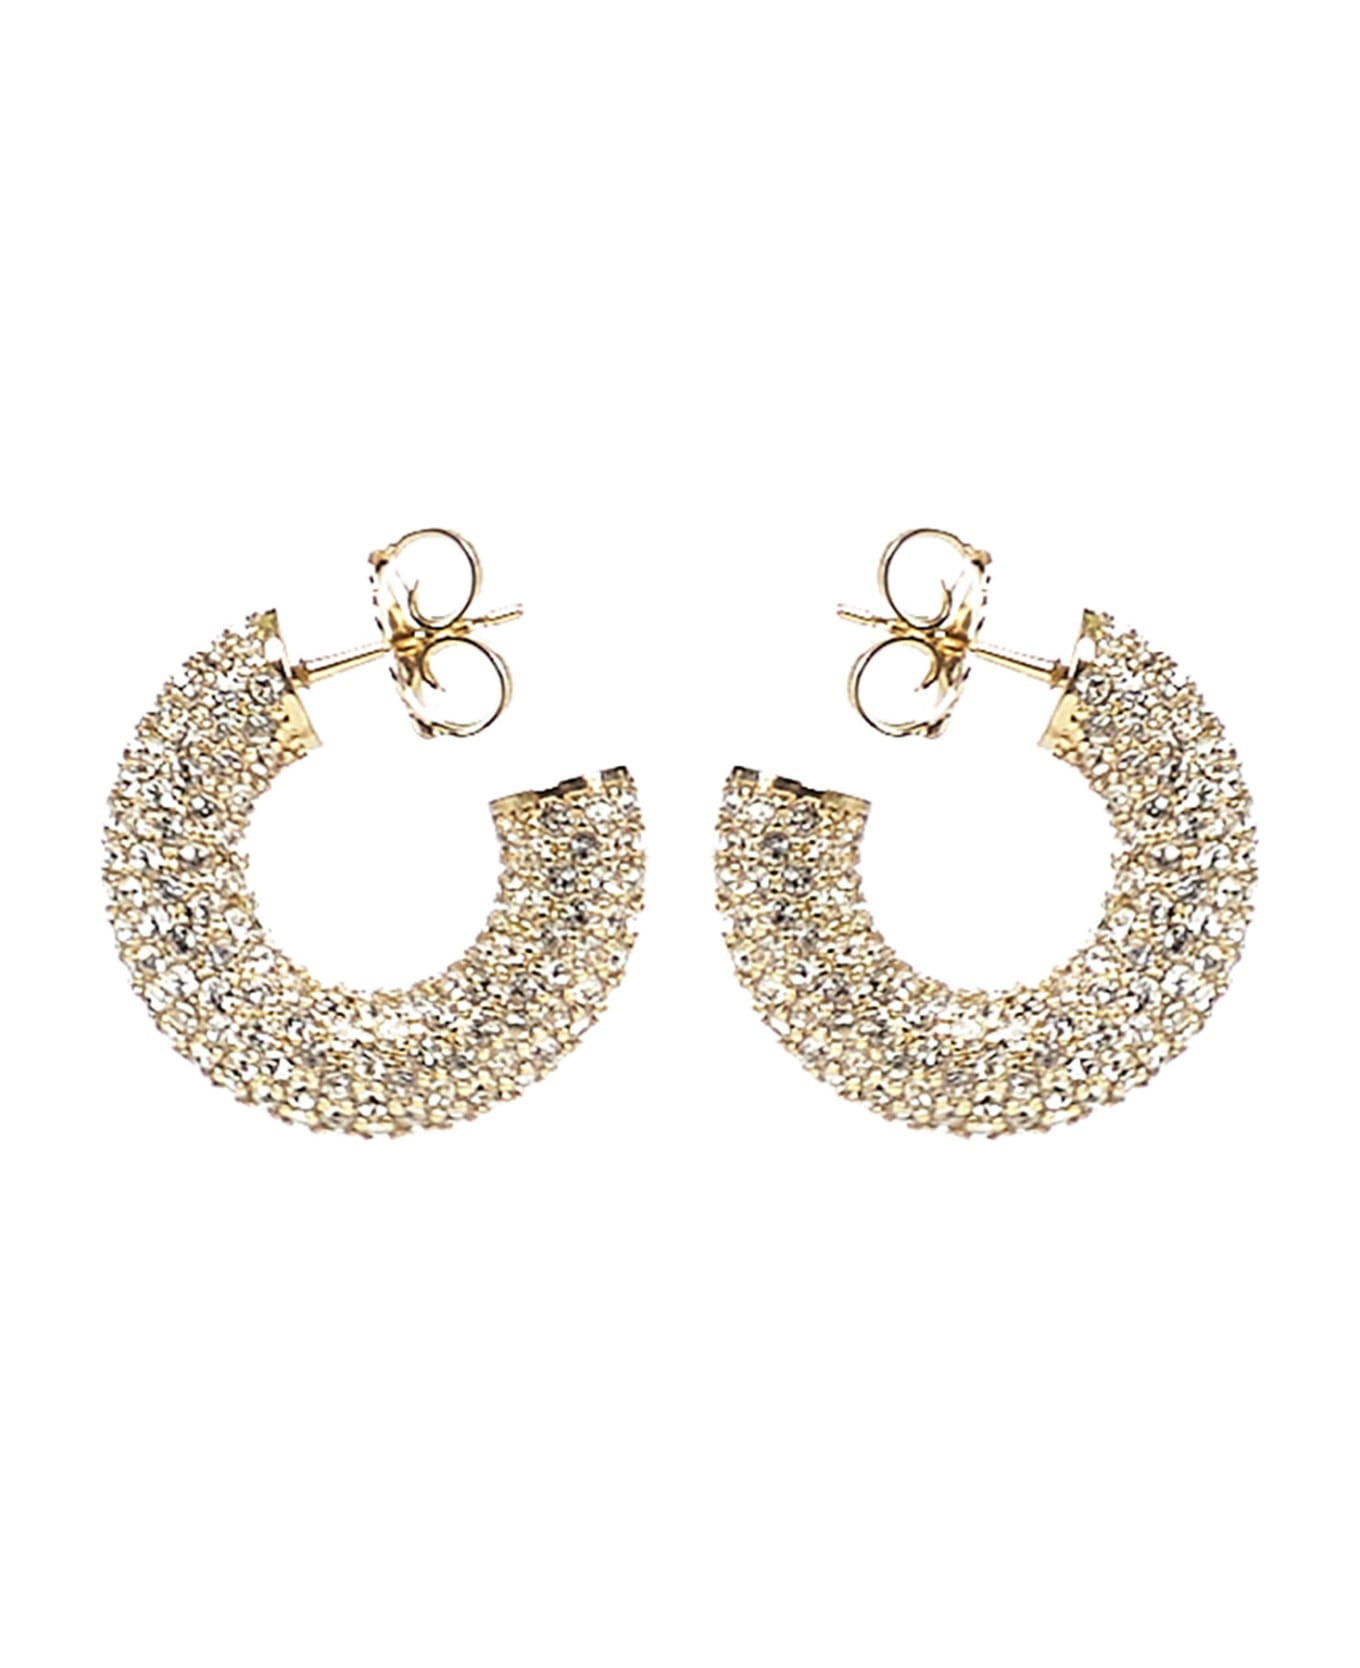 Amina Muaddi Cameron Small Earrings - Golden